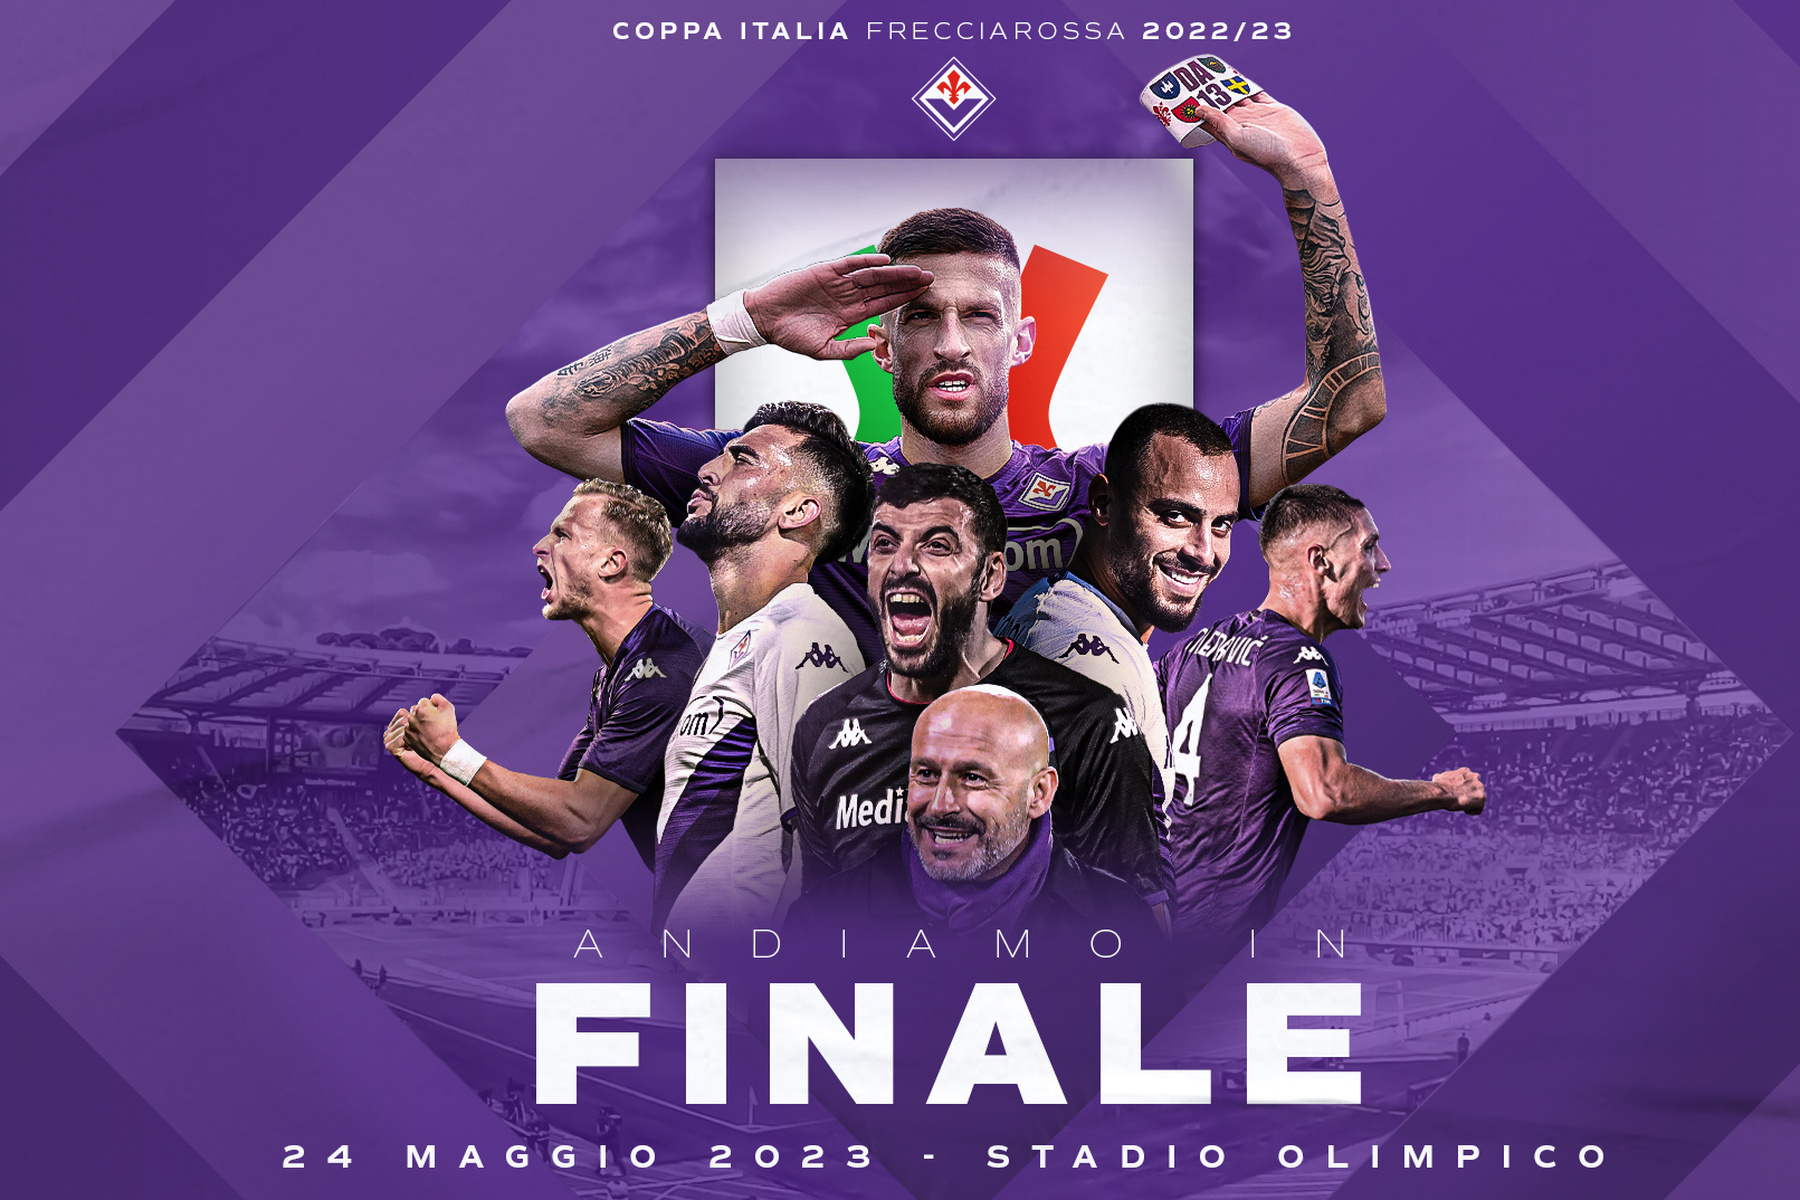 ACF Fiorentina v FC Inter 2023 Coppa Italia Final Pennant Size 38 cm x 32  cm